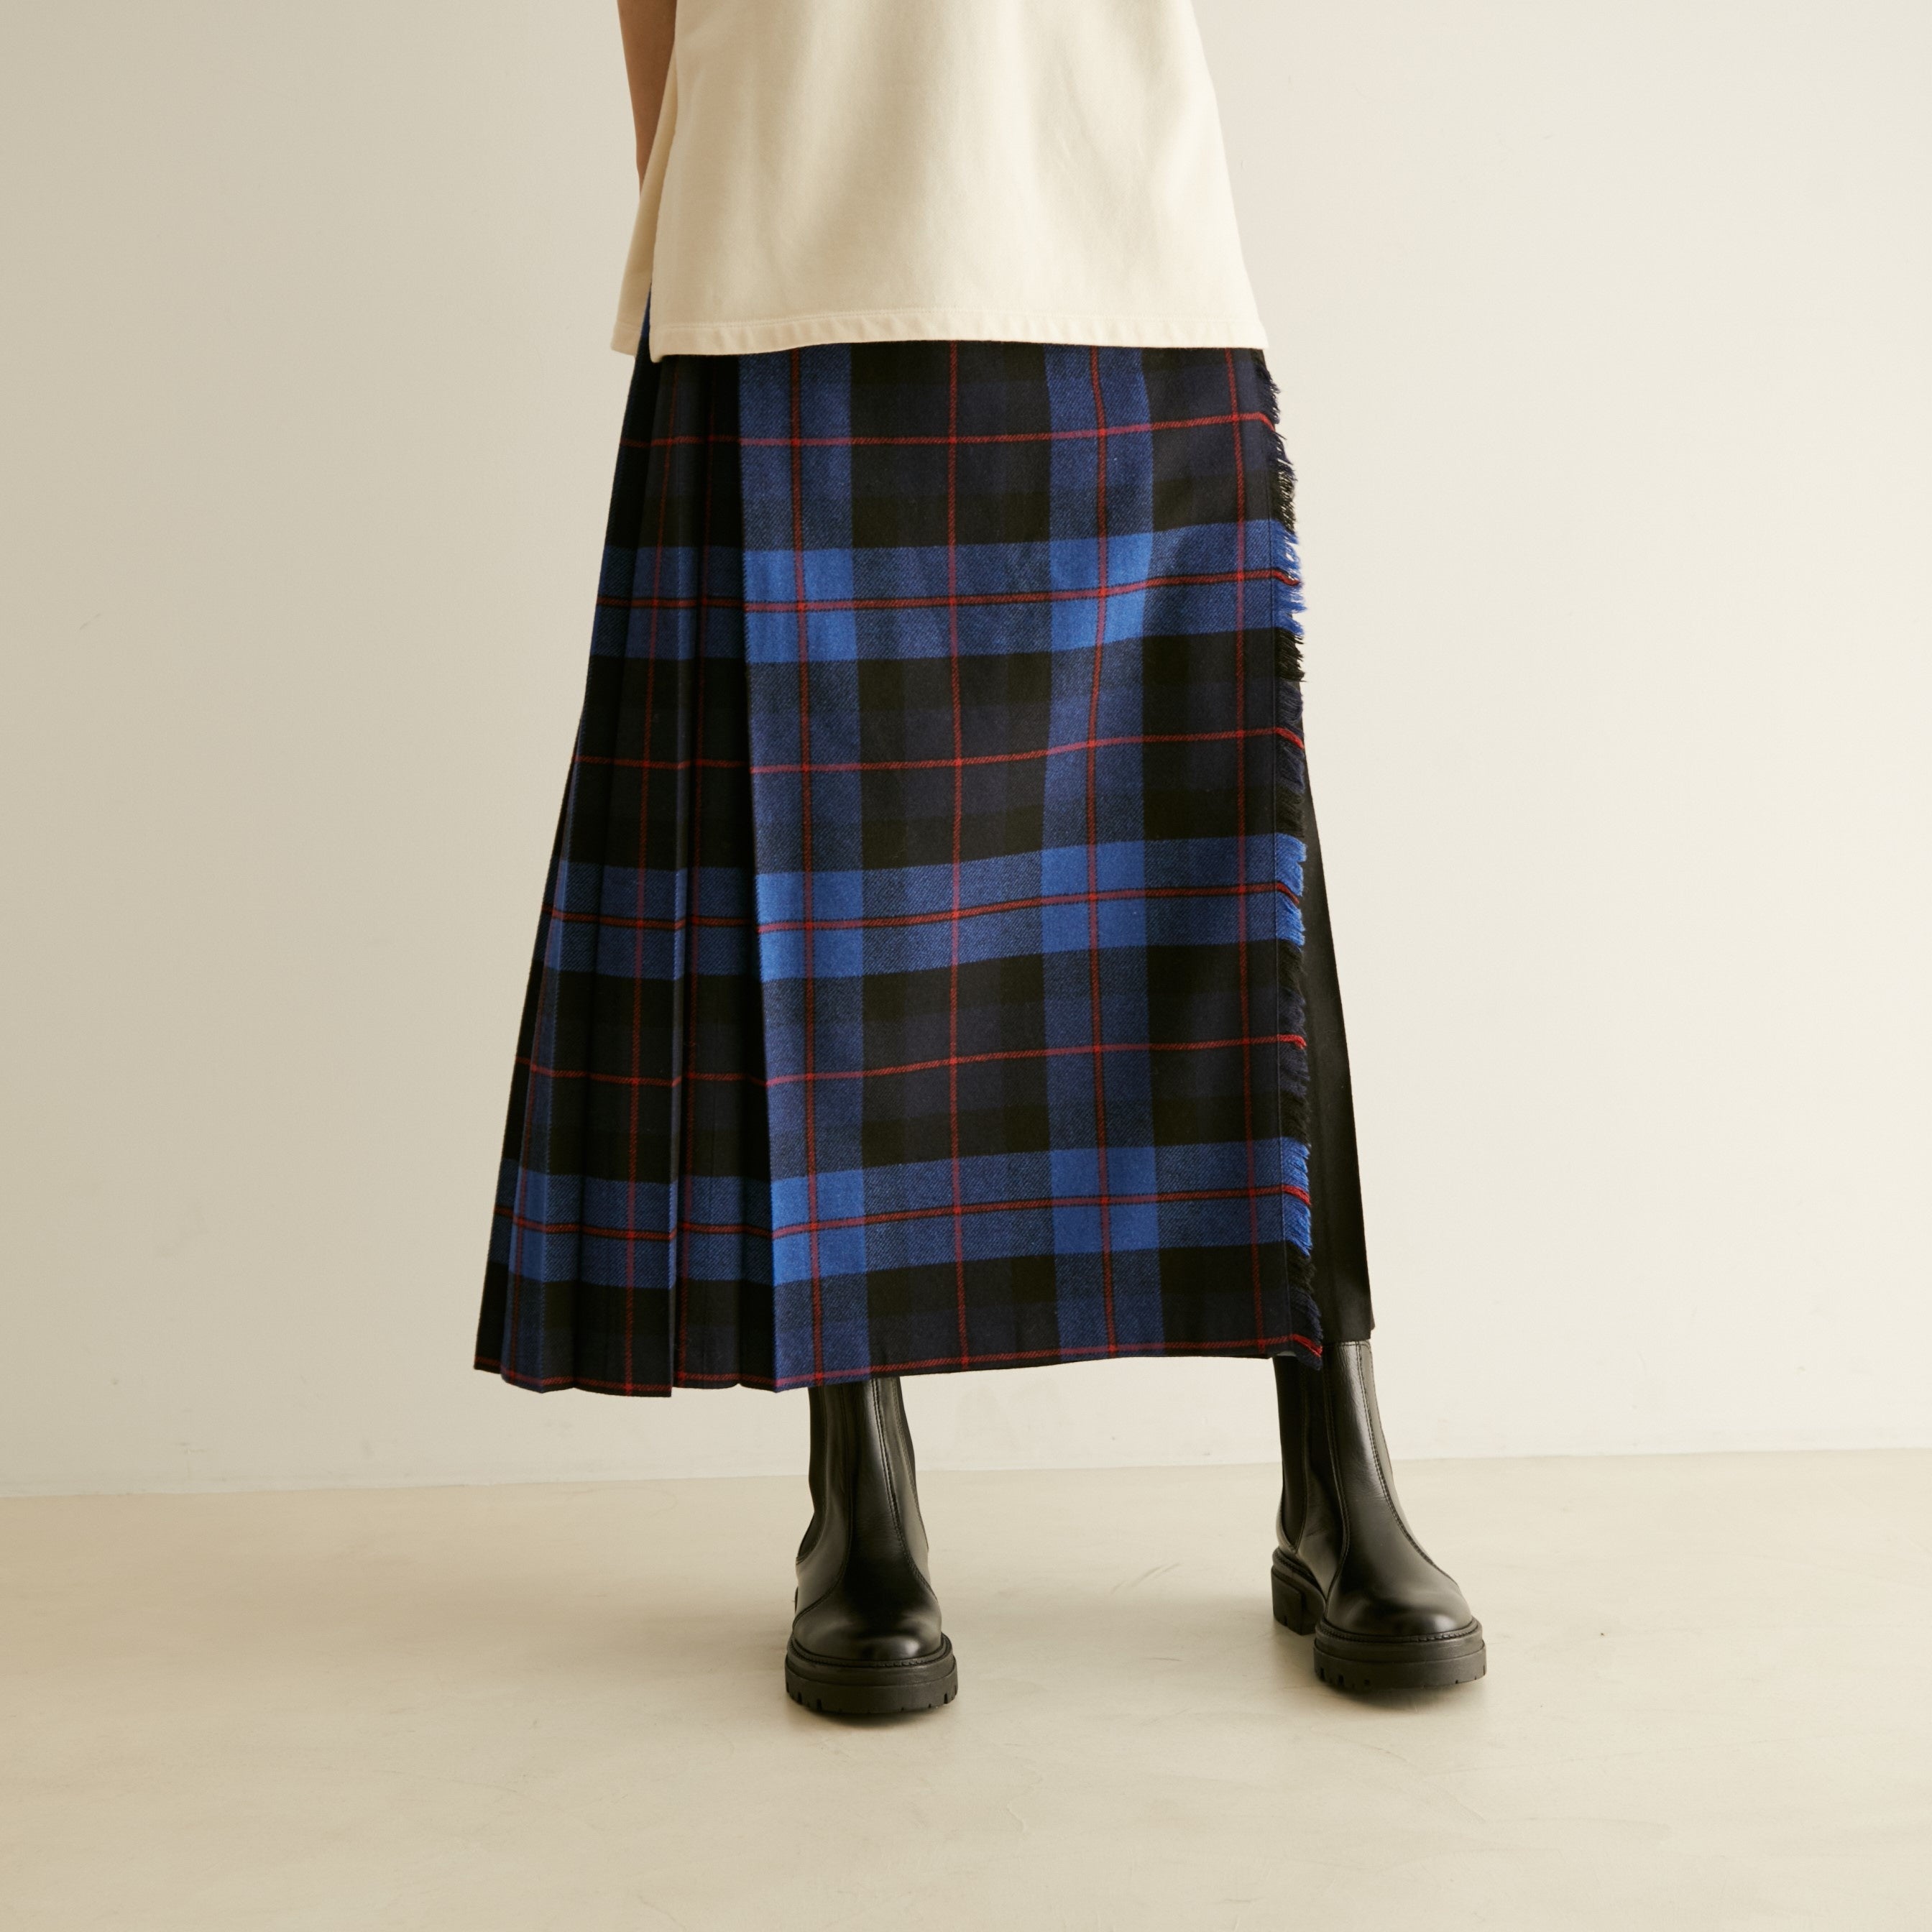 “O‘NEIL OF DUBLIN×SALON adam et ropé” 異なる柄を組み合わせた、2種の別注コンビキルトスカートを発売